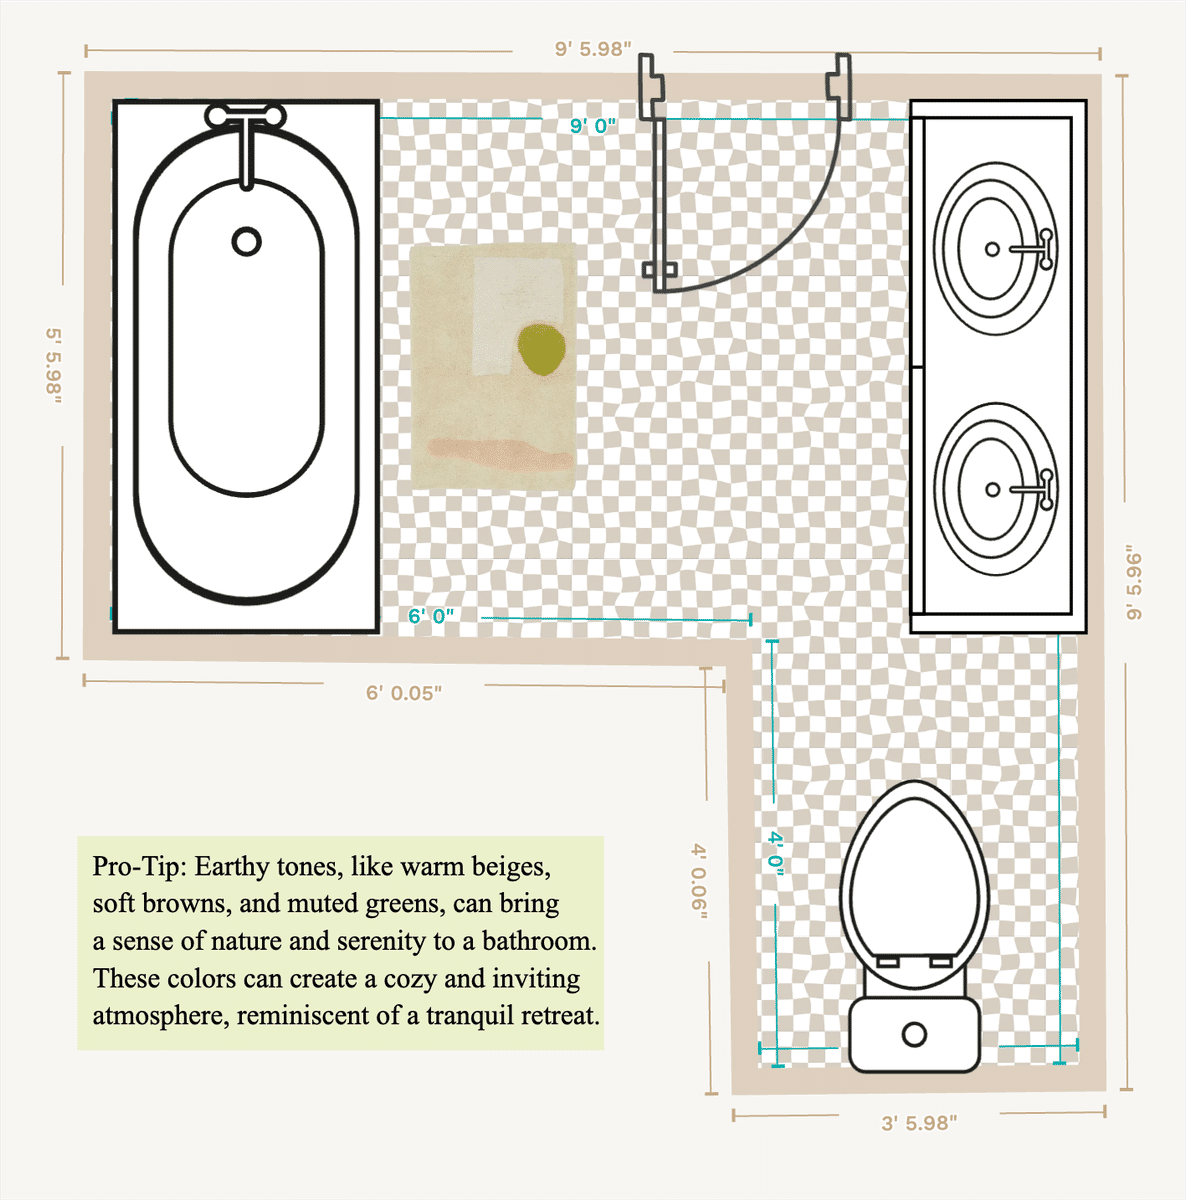 Medium Bathroom Floor Plan designed by Becca Kessel